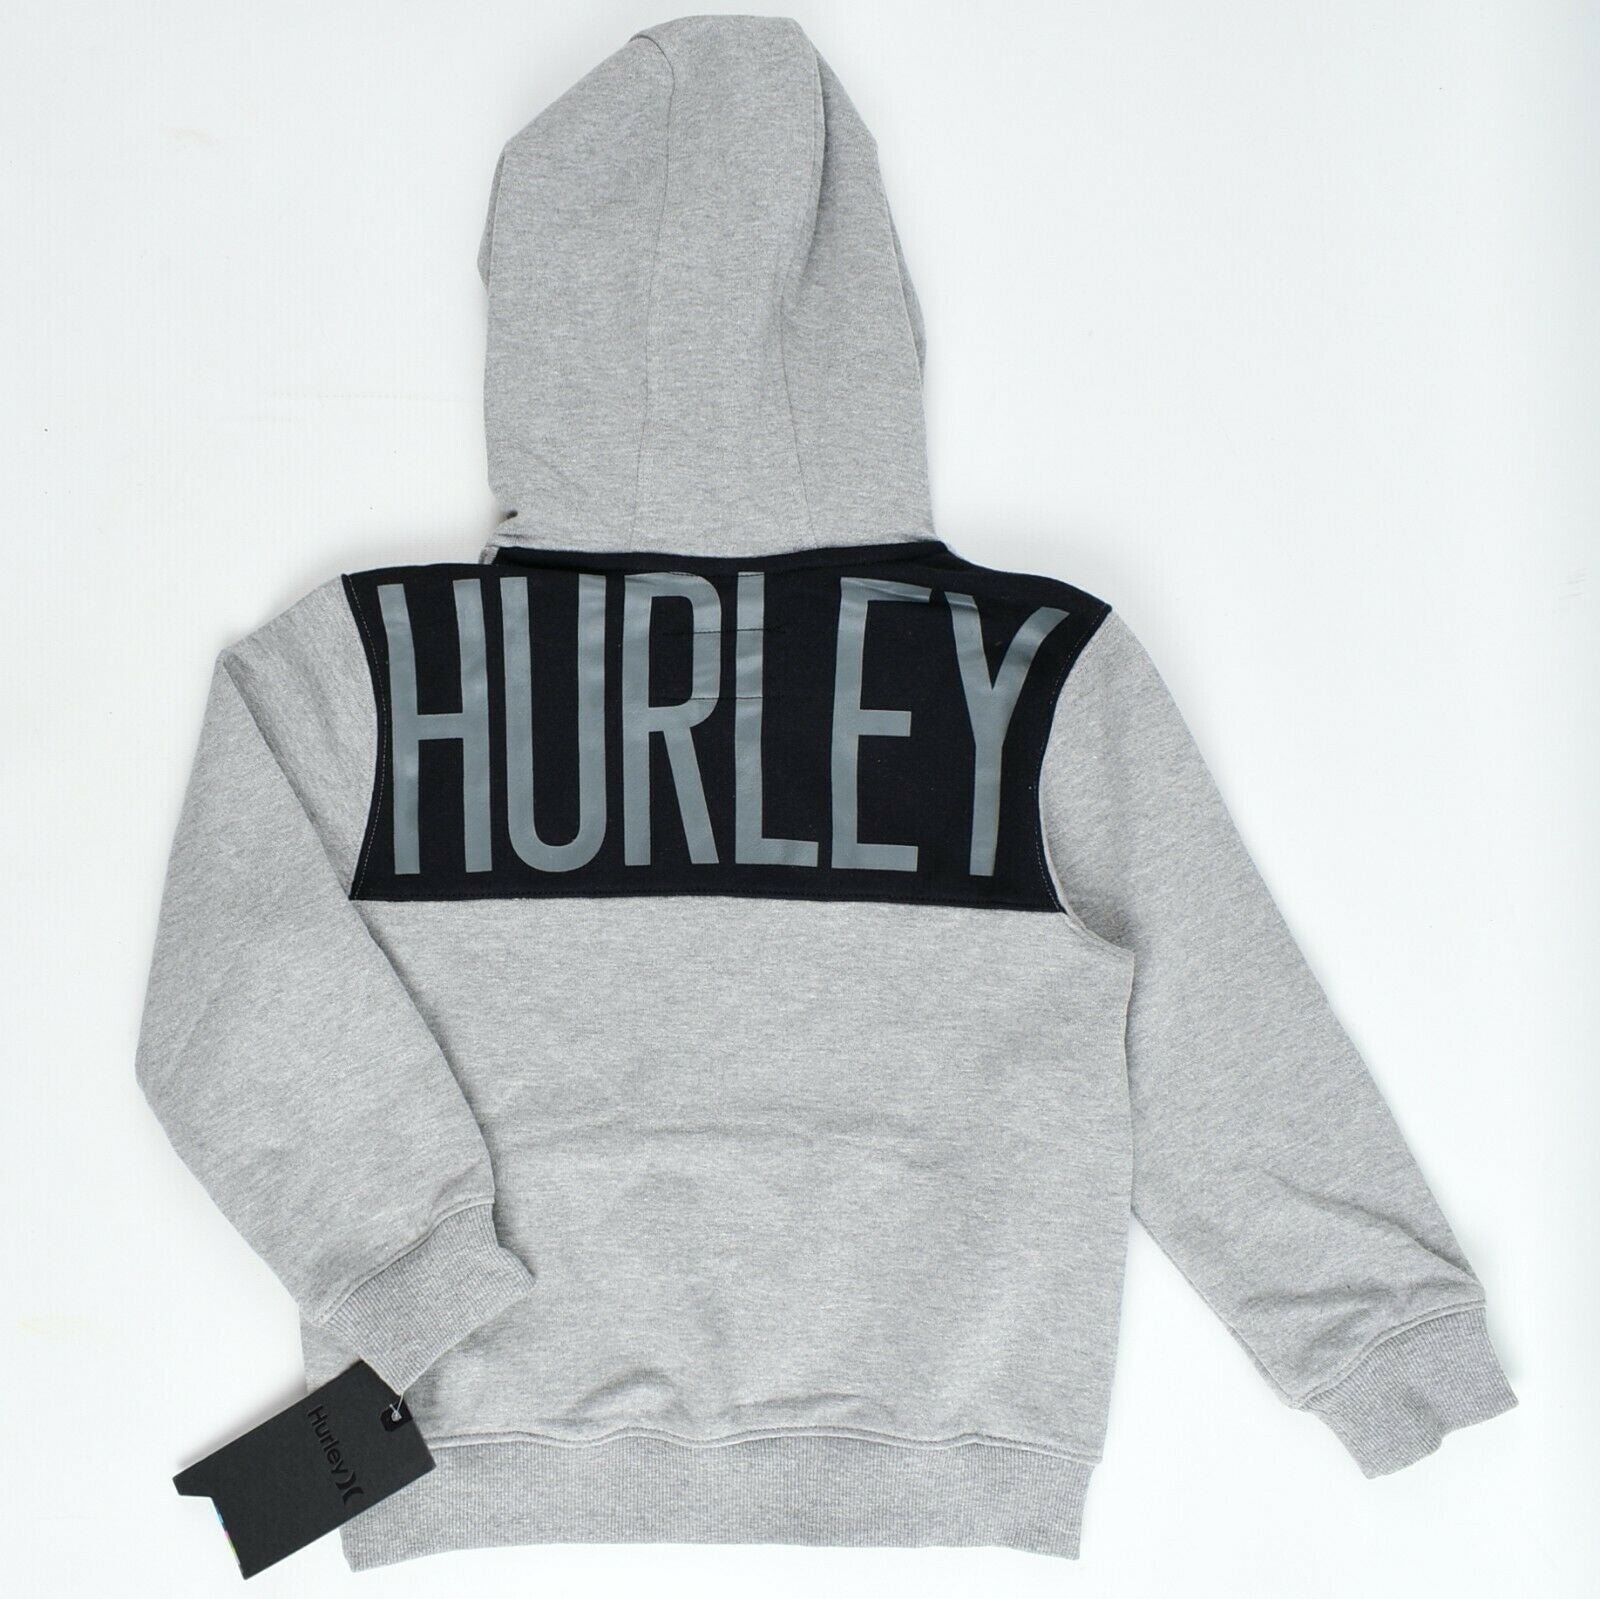 HURLEY Boys' Kids' Hooded Sweatshirt, Hoodie, Grey, size 6 years